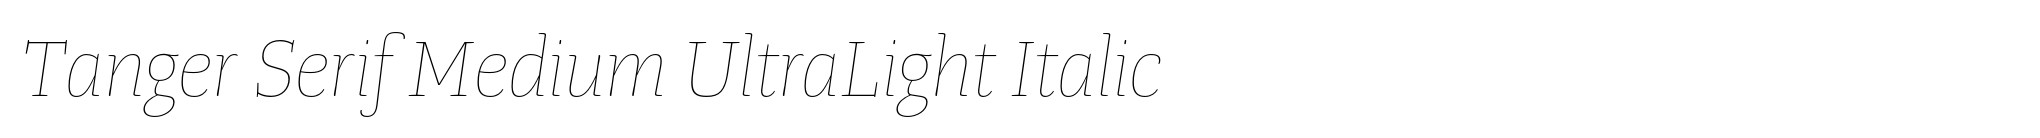 Tanger Serif Medium UltraLight Italic image